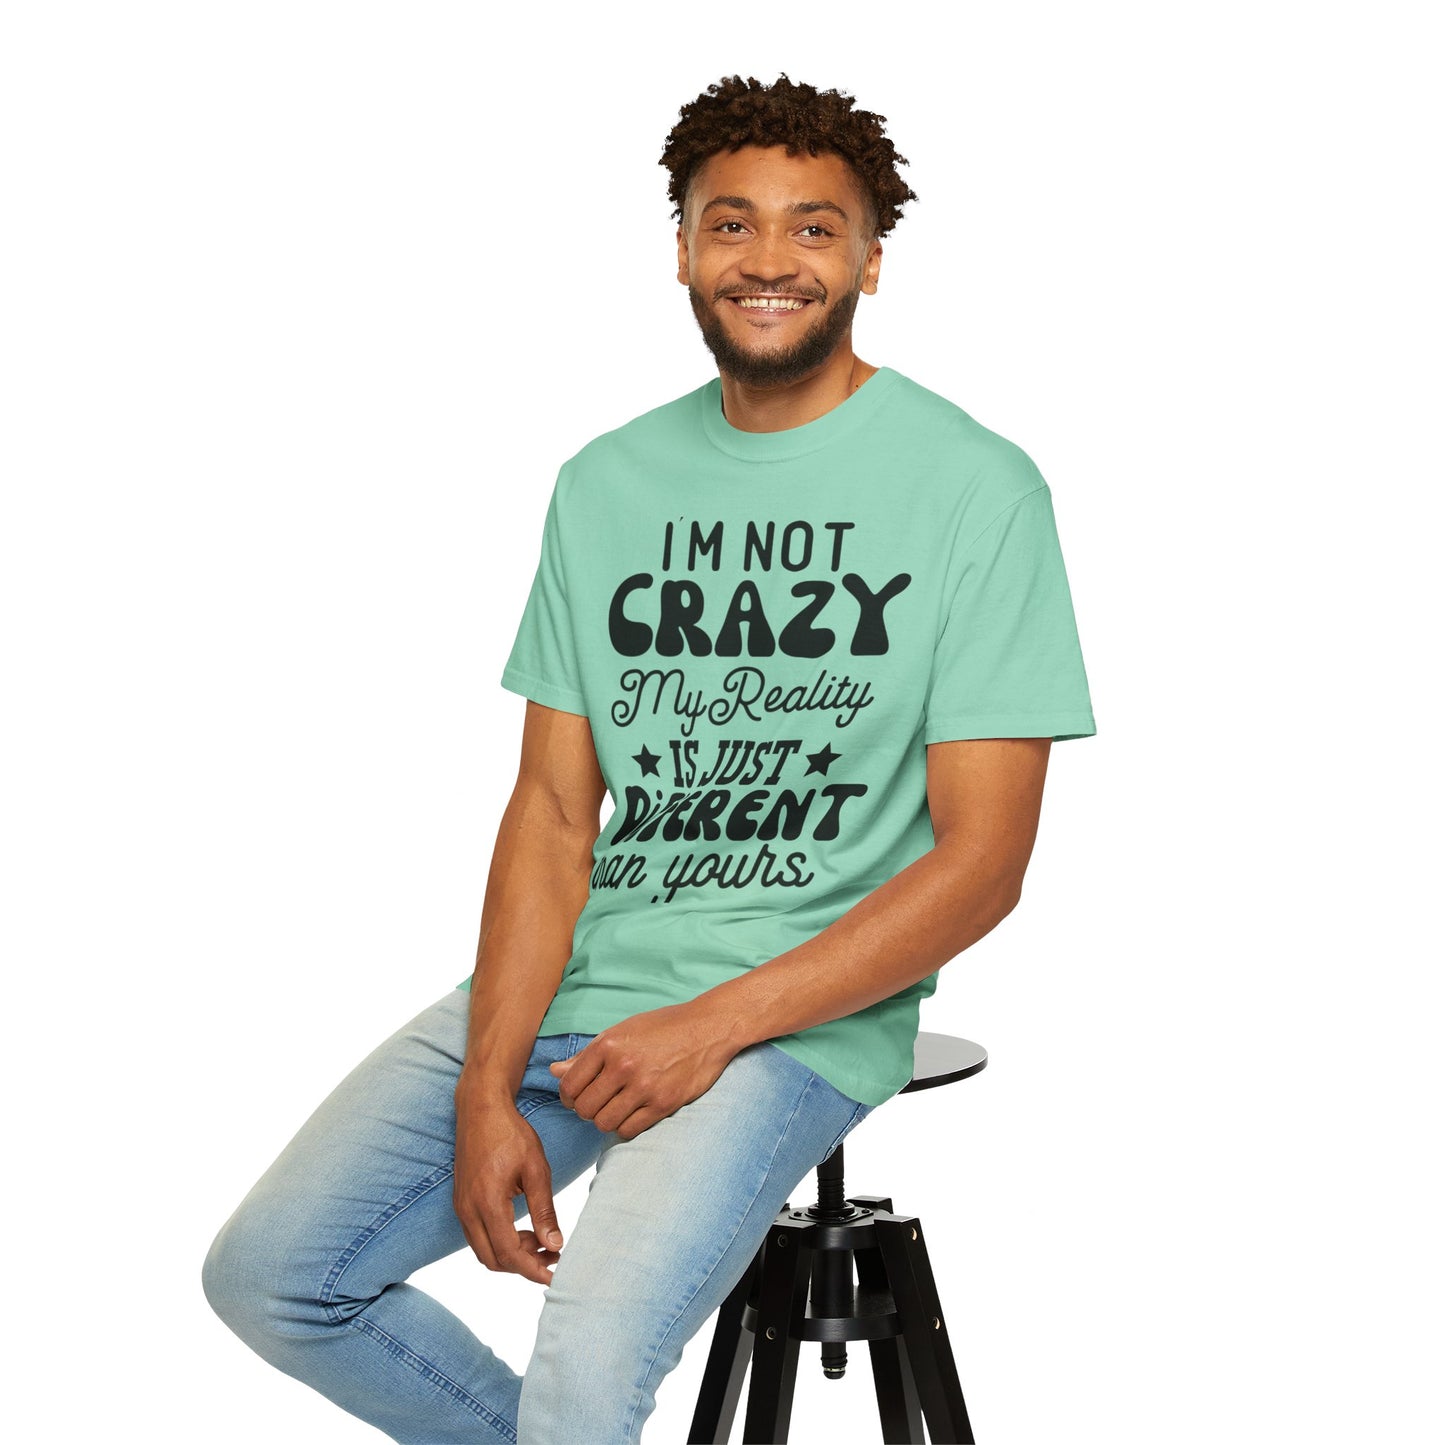 I'm not crazy - Unisex Garment-Dyed T-shirt